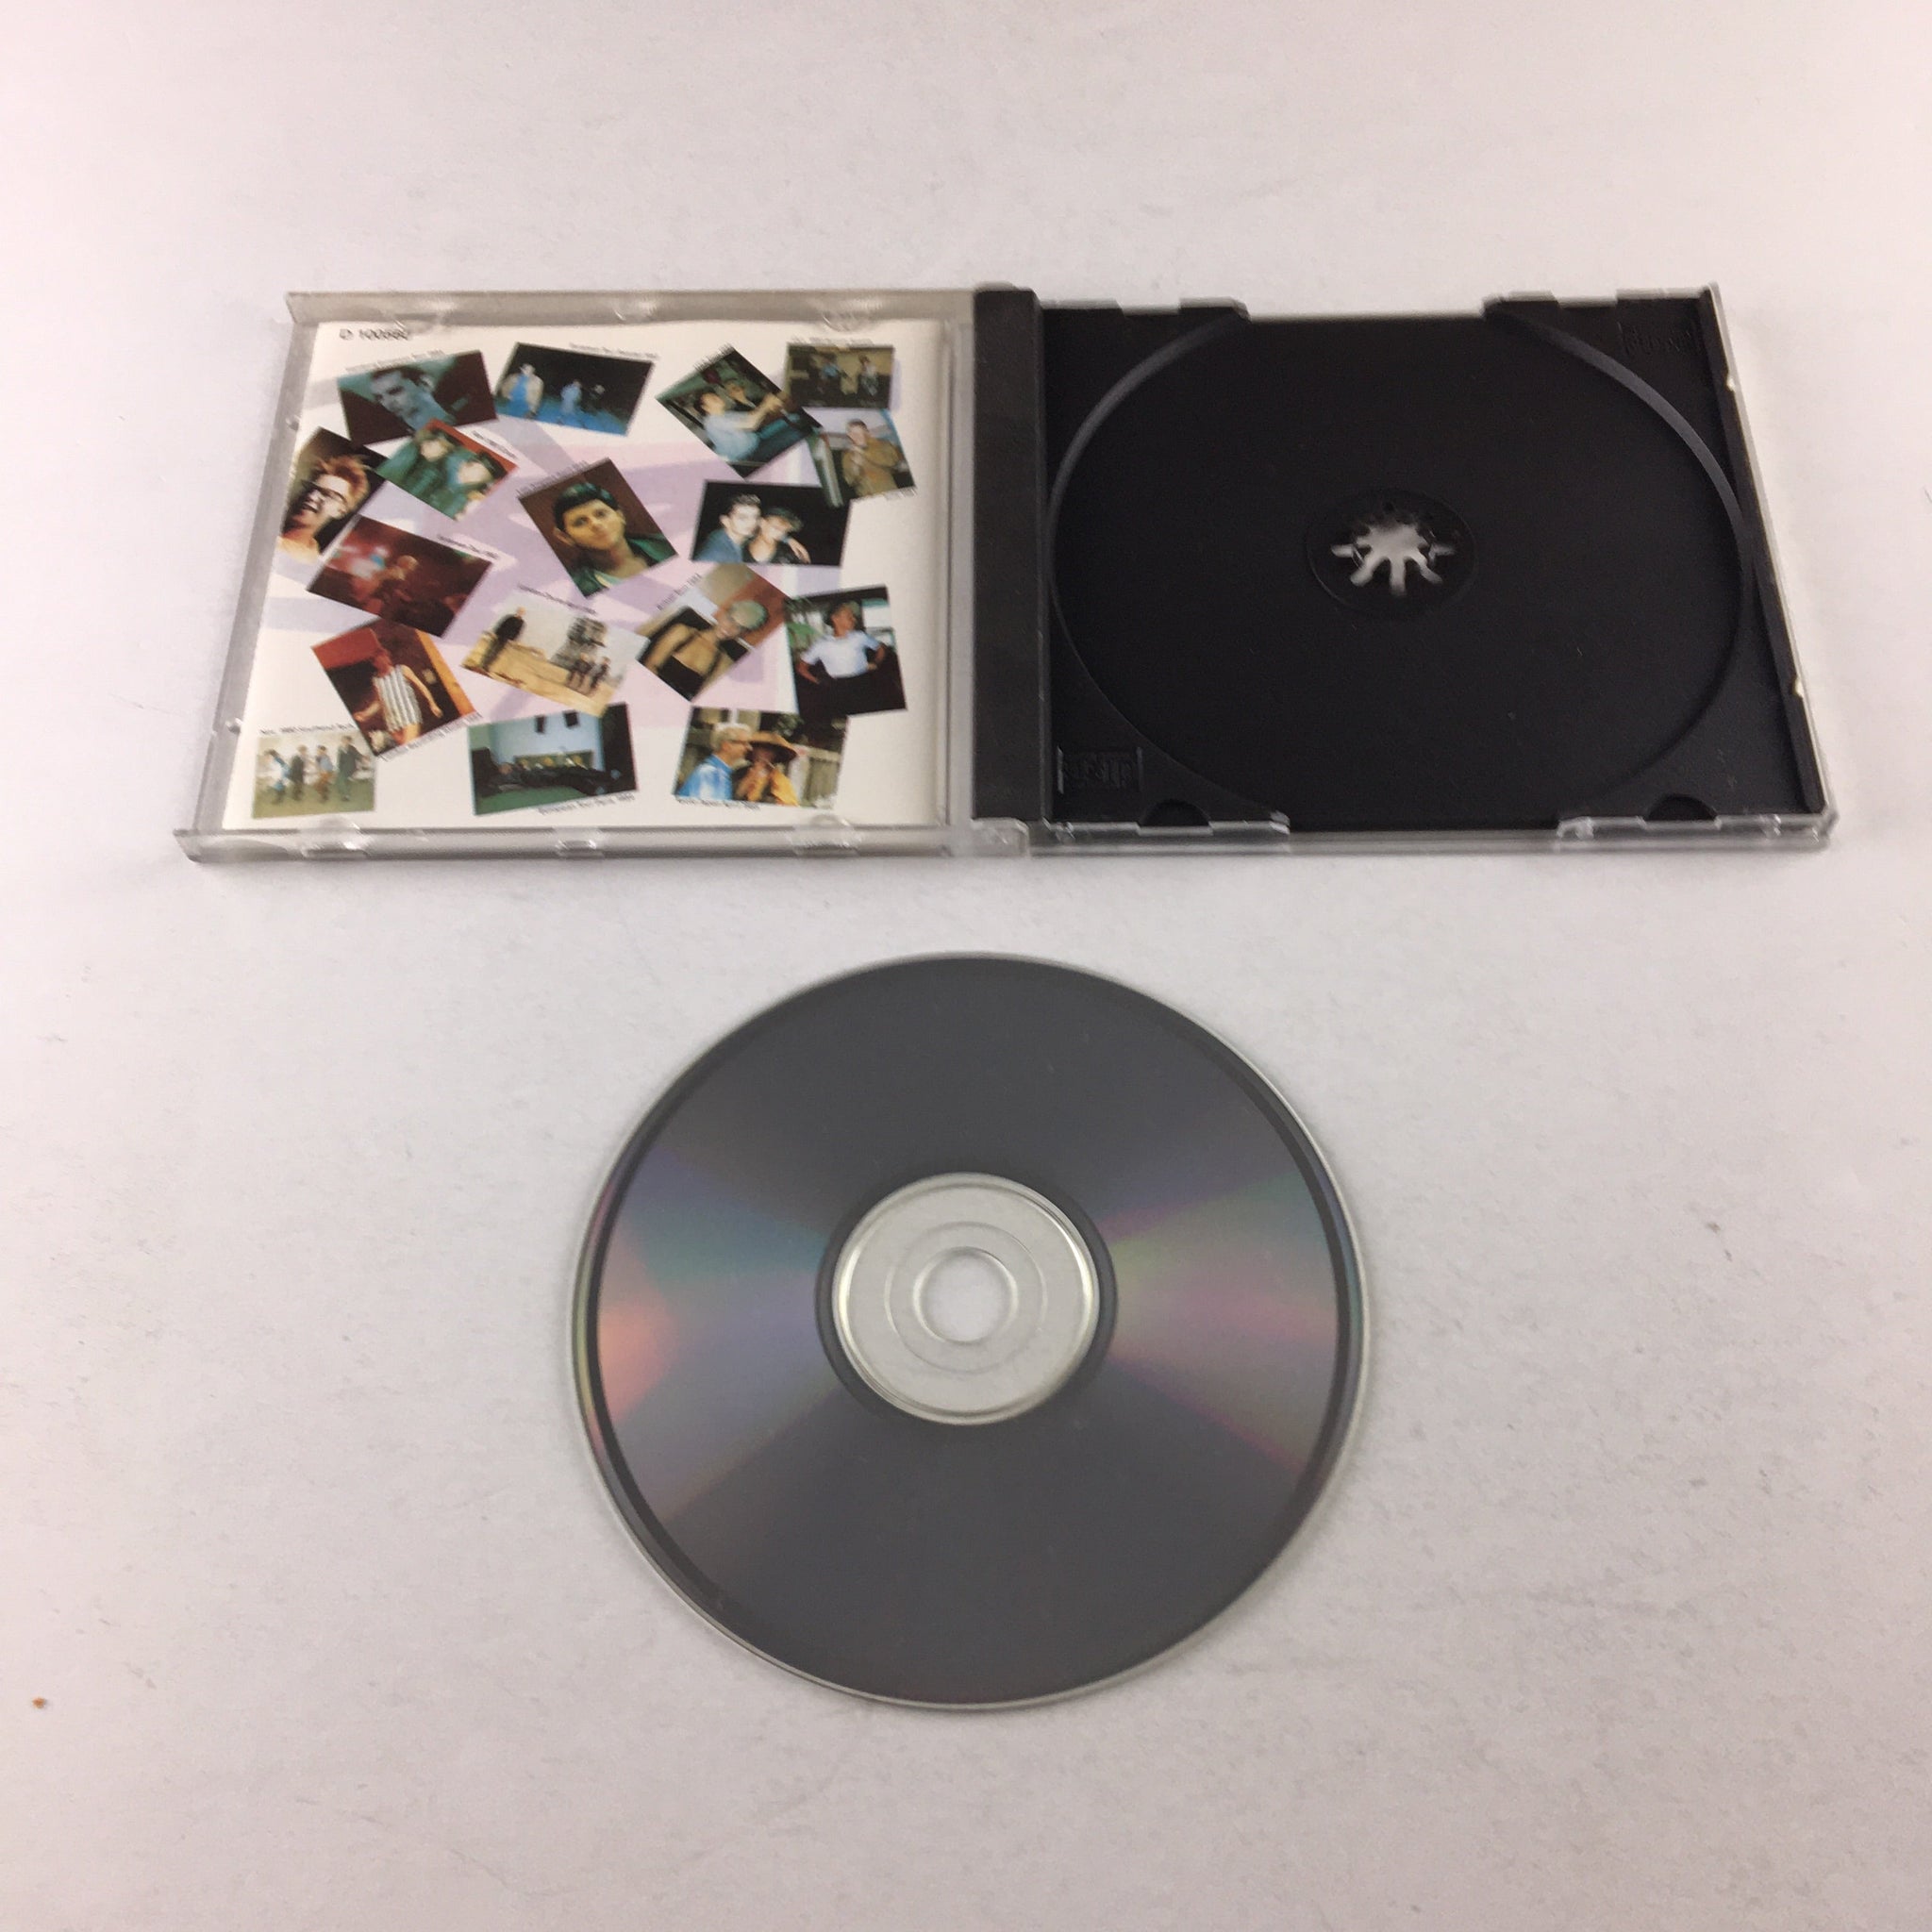 Catching Up With Depeche Mode: CDs & Vinyl 